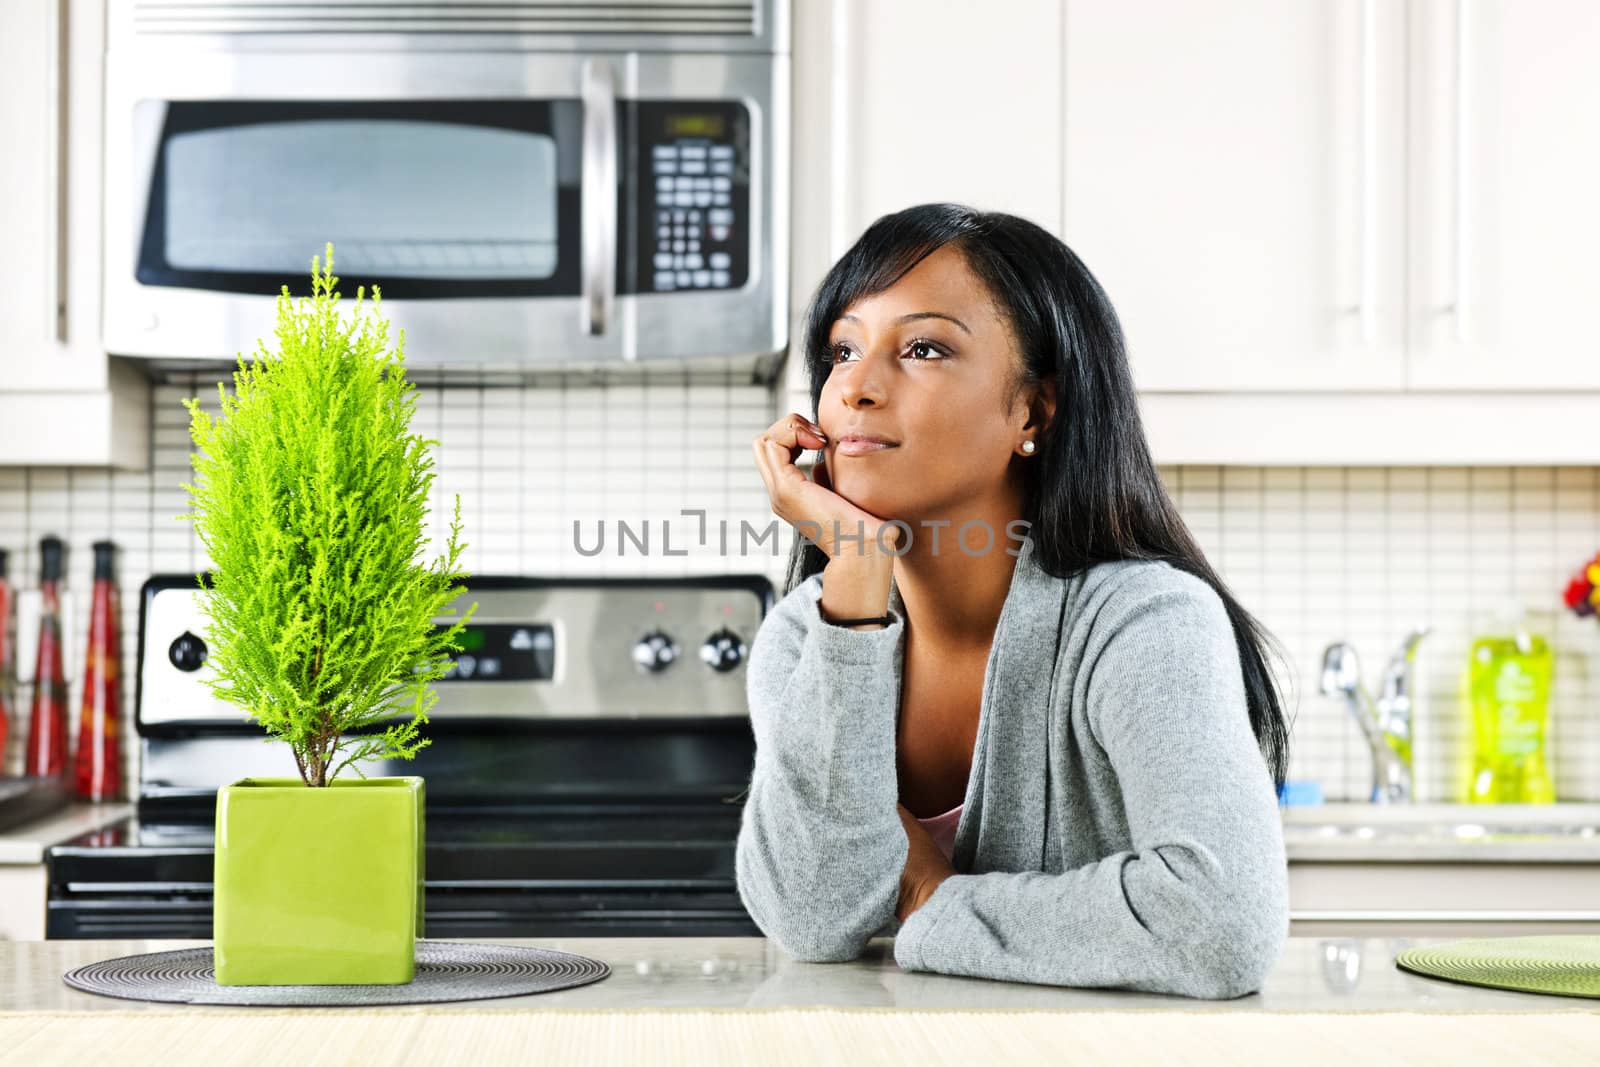 Thoughtful black woman in modern kitchen interior